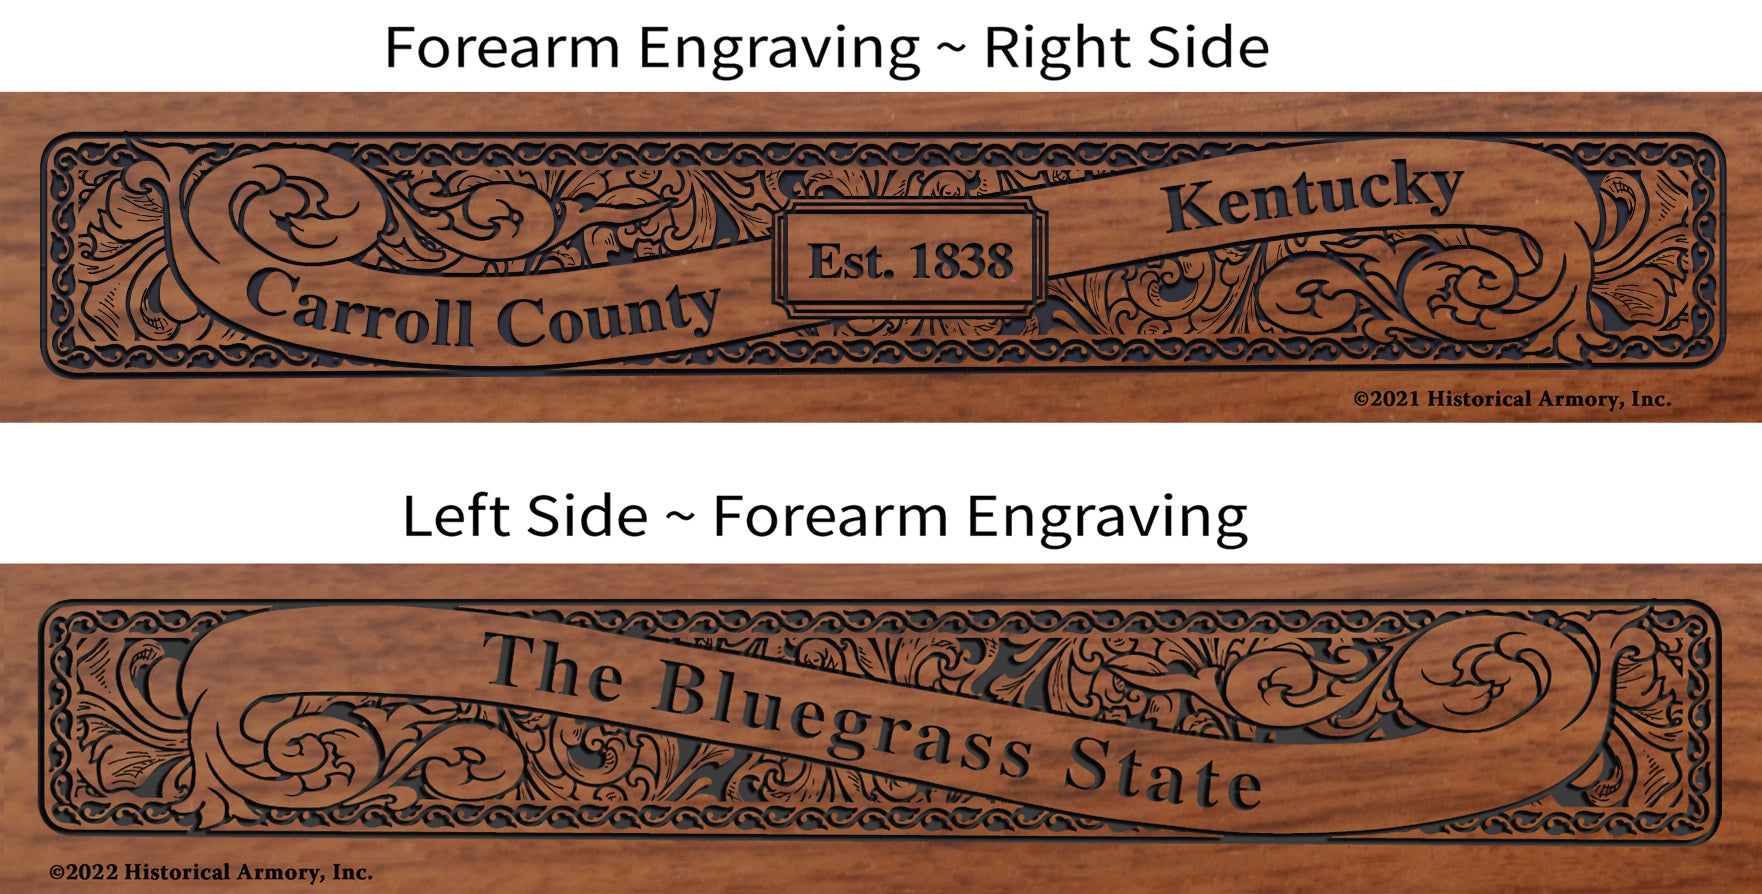 Carroll County Kentucky Engraved Rifle Forearm